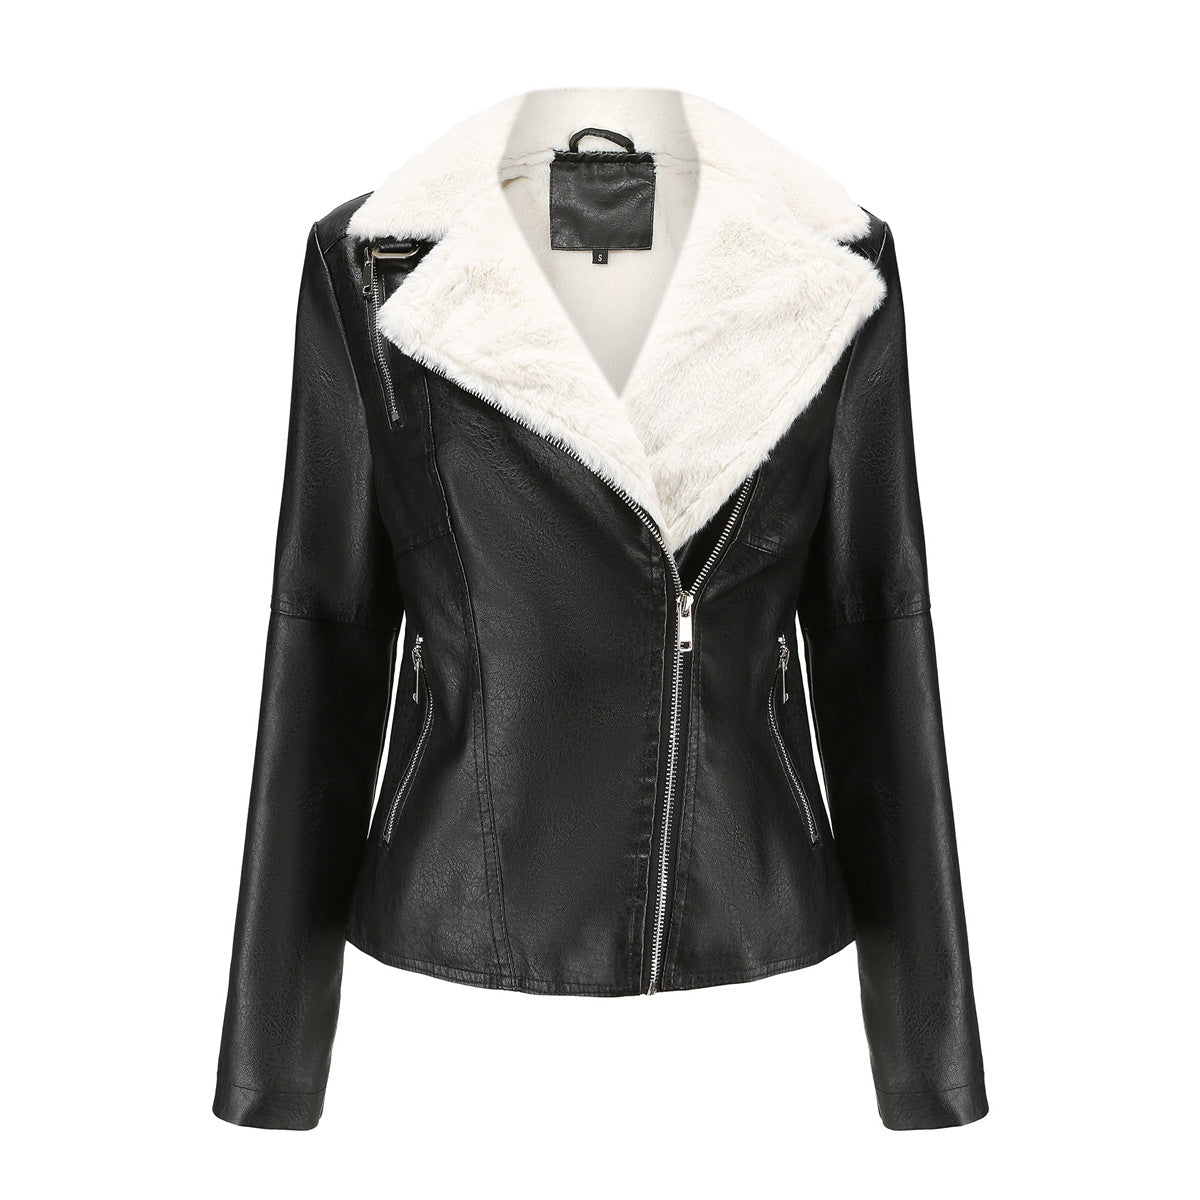 Fur Integrated Leather Urban Style Women's Fleece-lined Long Sleeve Warm Jacket Casual Coat